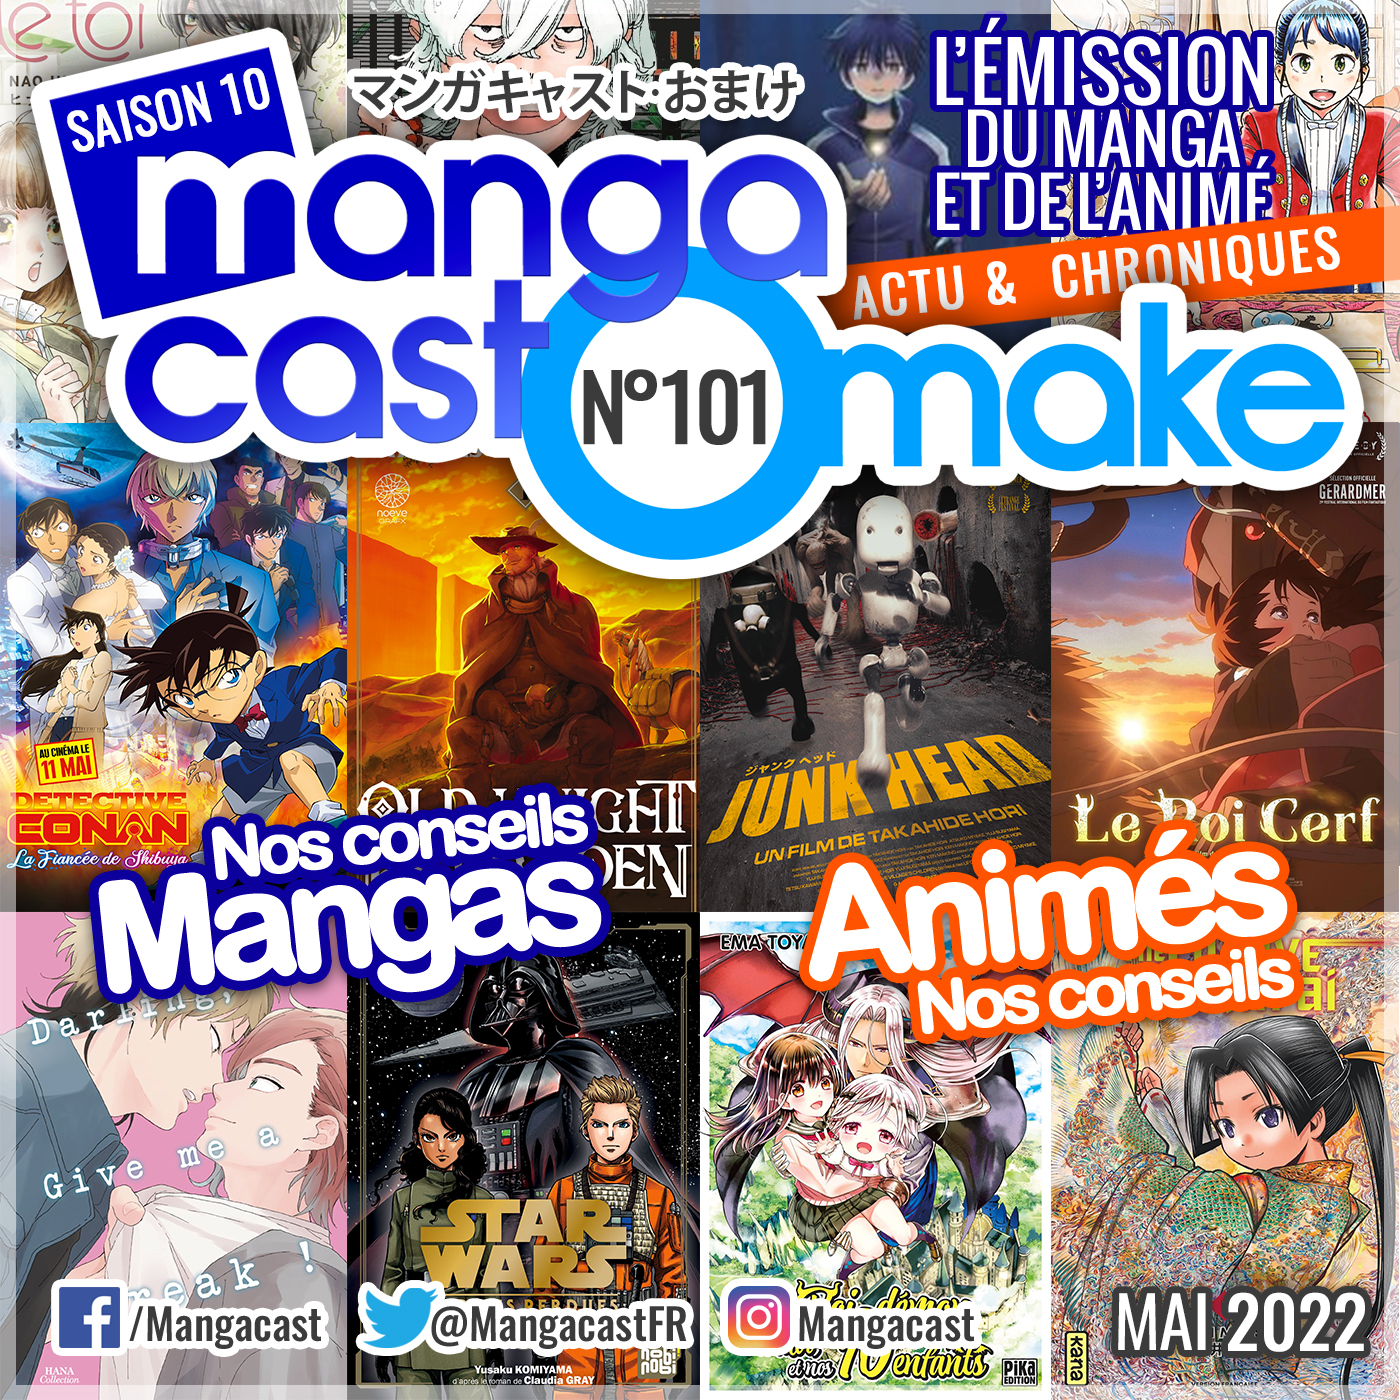 Cartouche du Mangacast Omake n°101